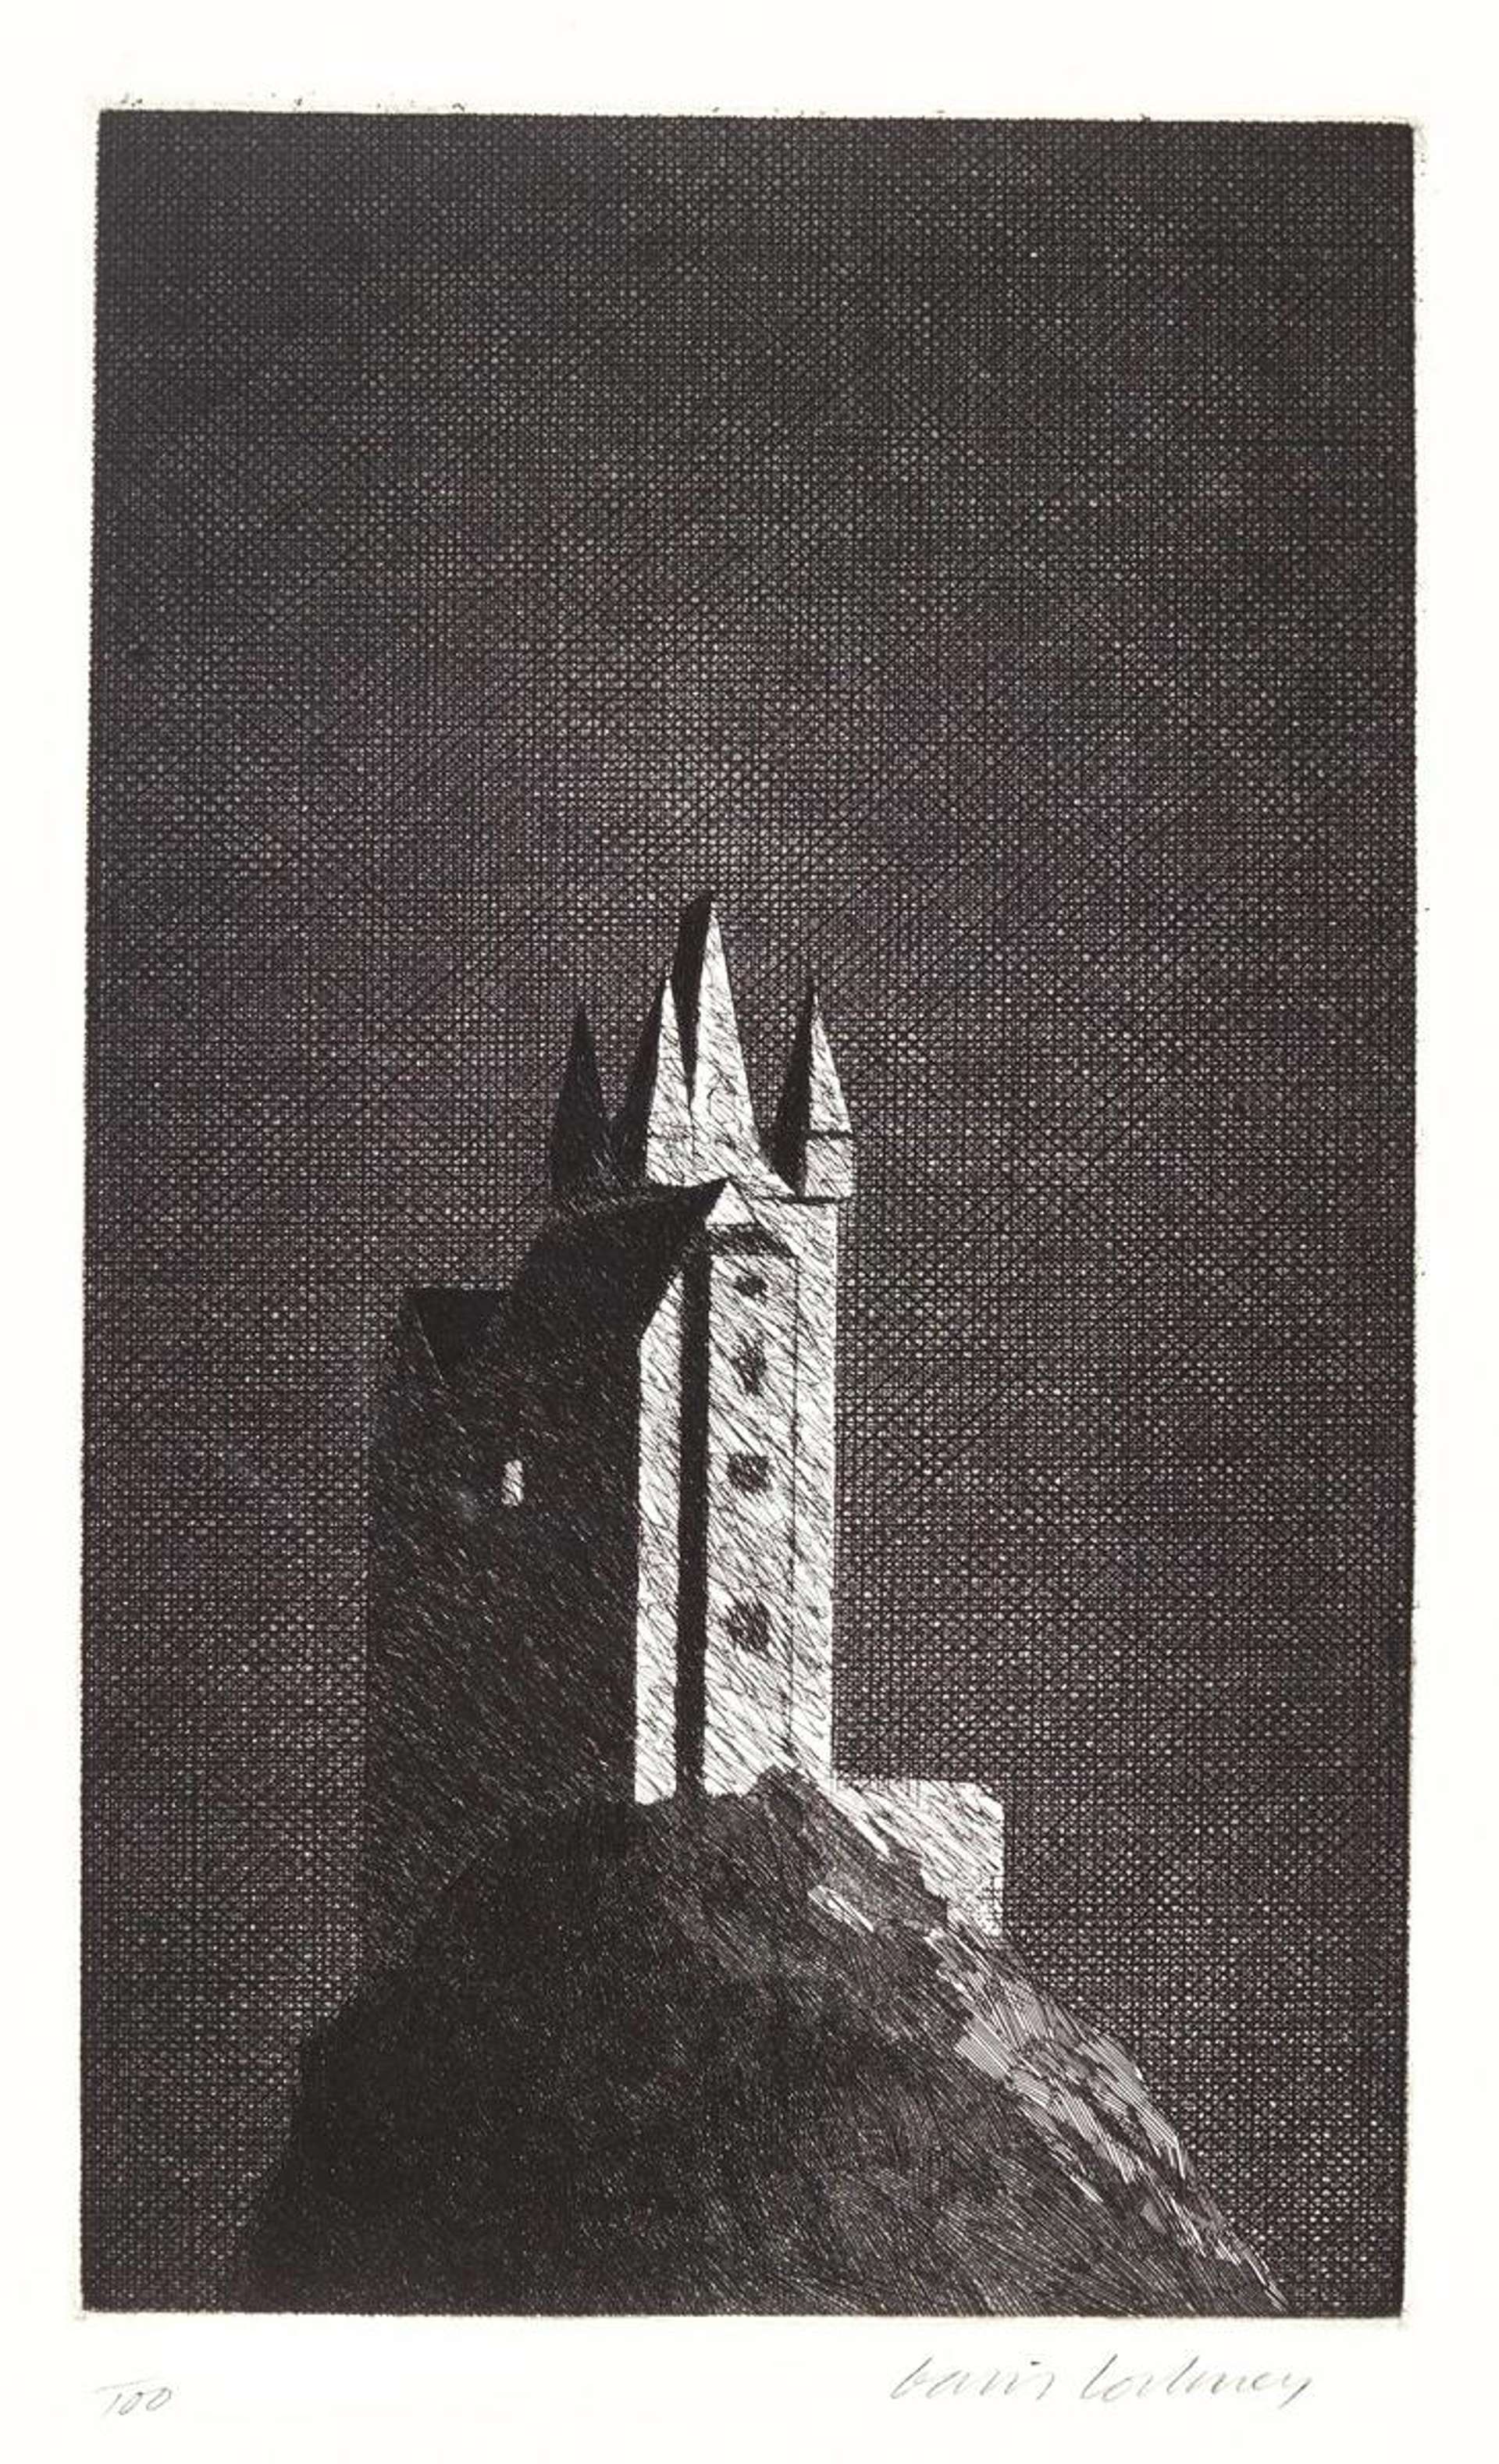 David Hockney: The Haunted Castle - Signed Print